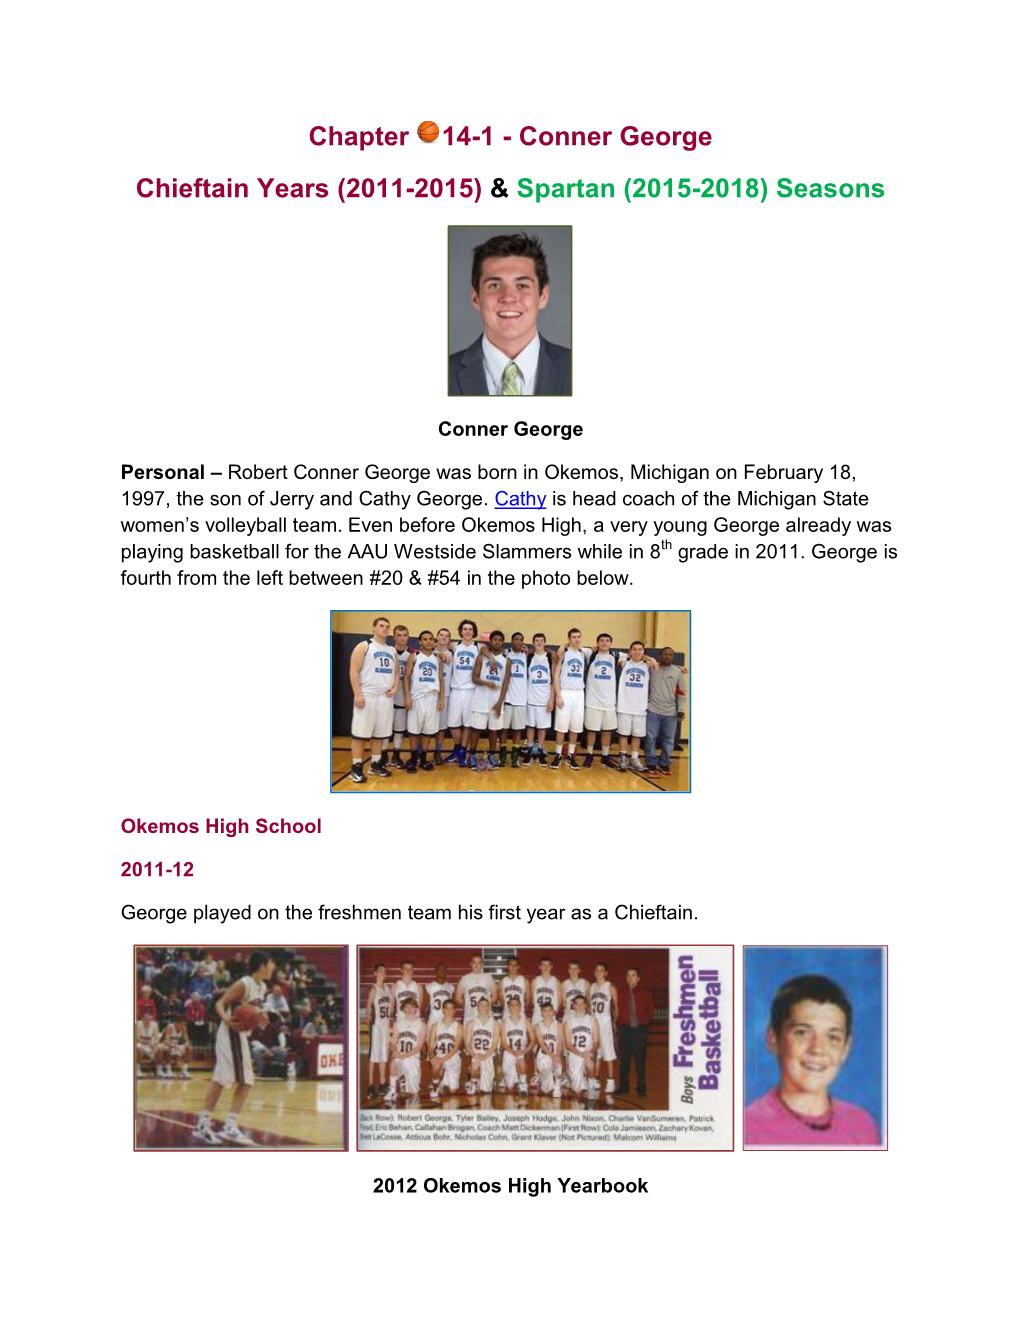 Conner George Chieftain Years (2011-2015) & Spartan (2015-2018) Seasons